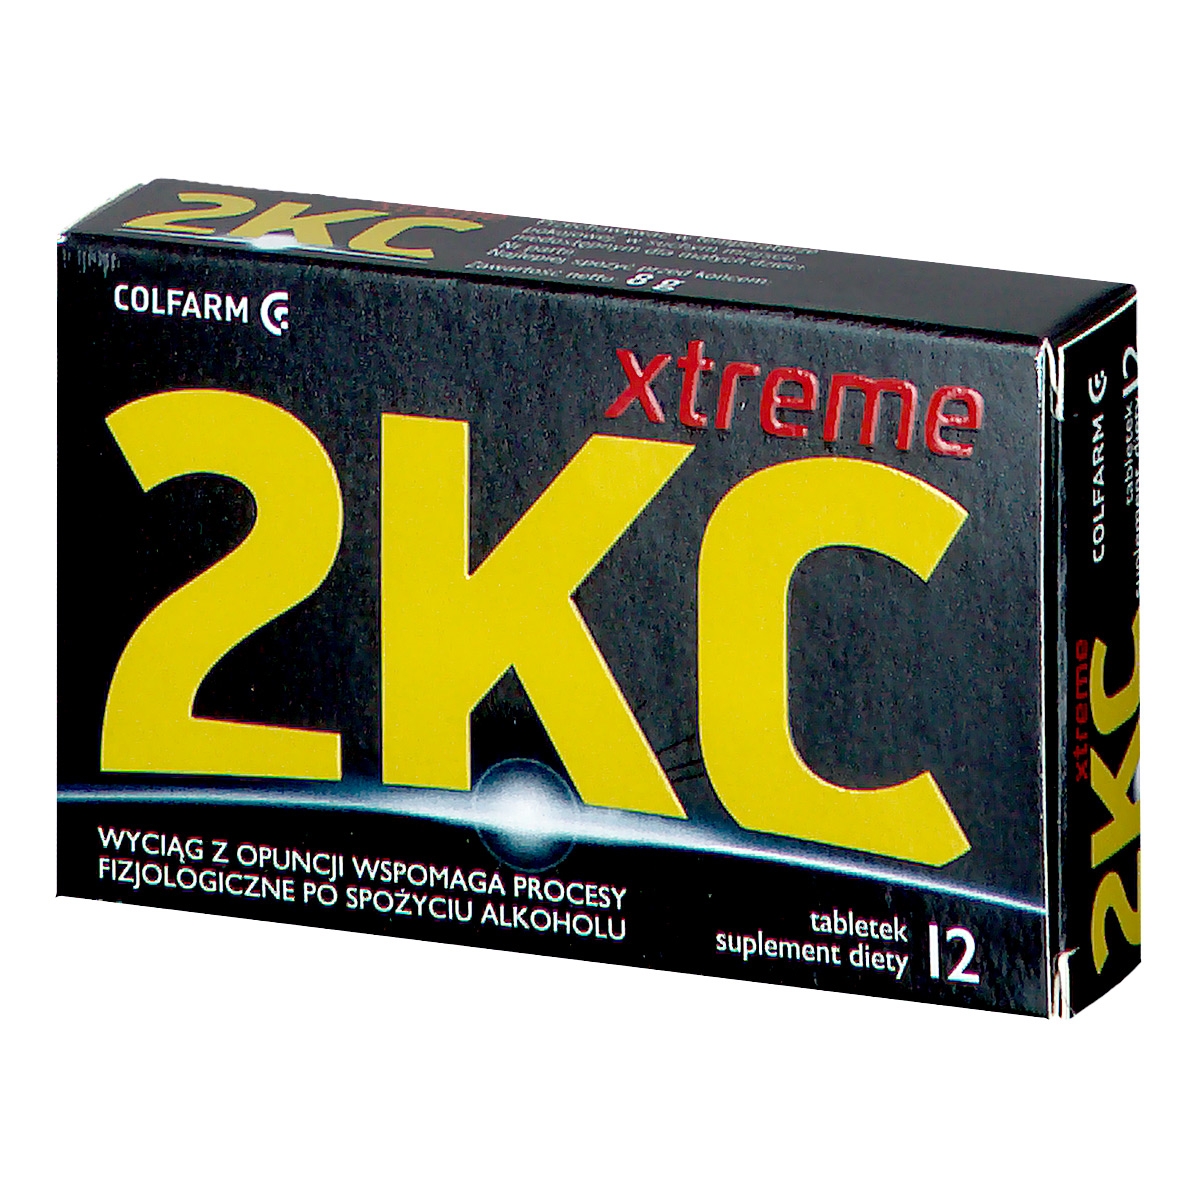 Image of 2kc xtreme tabletki 12